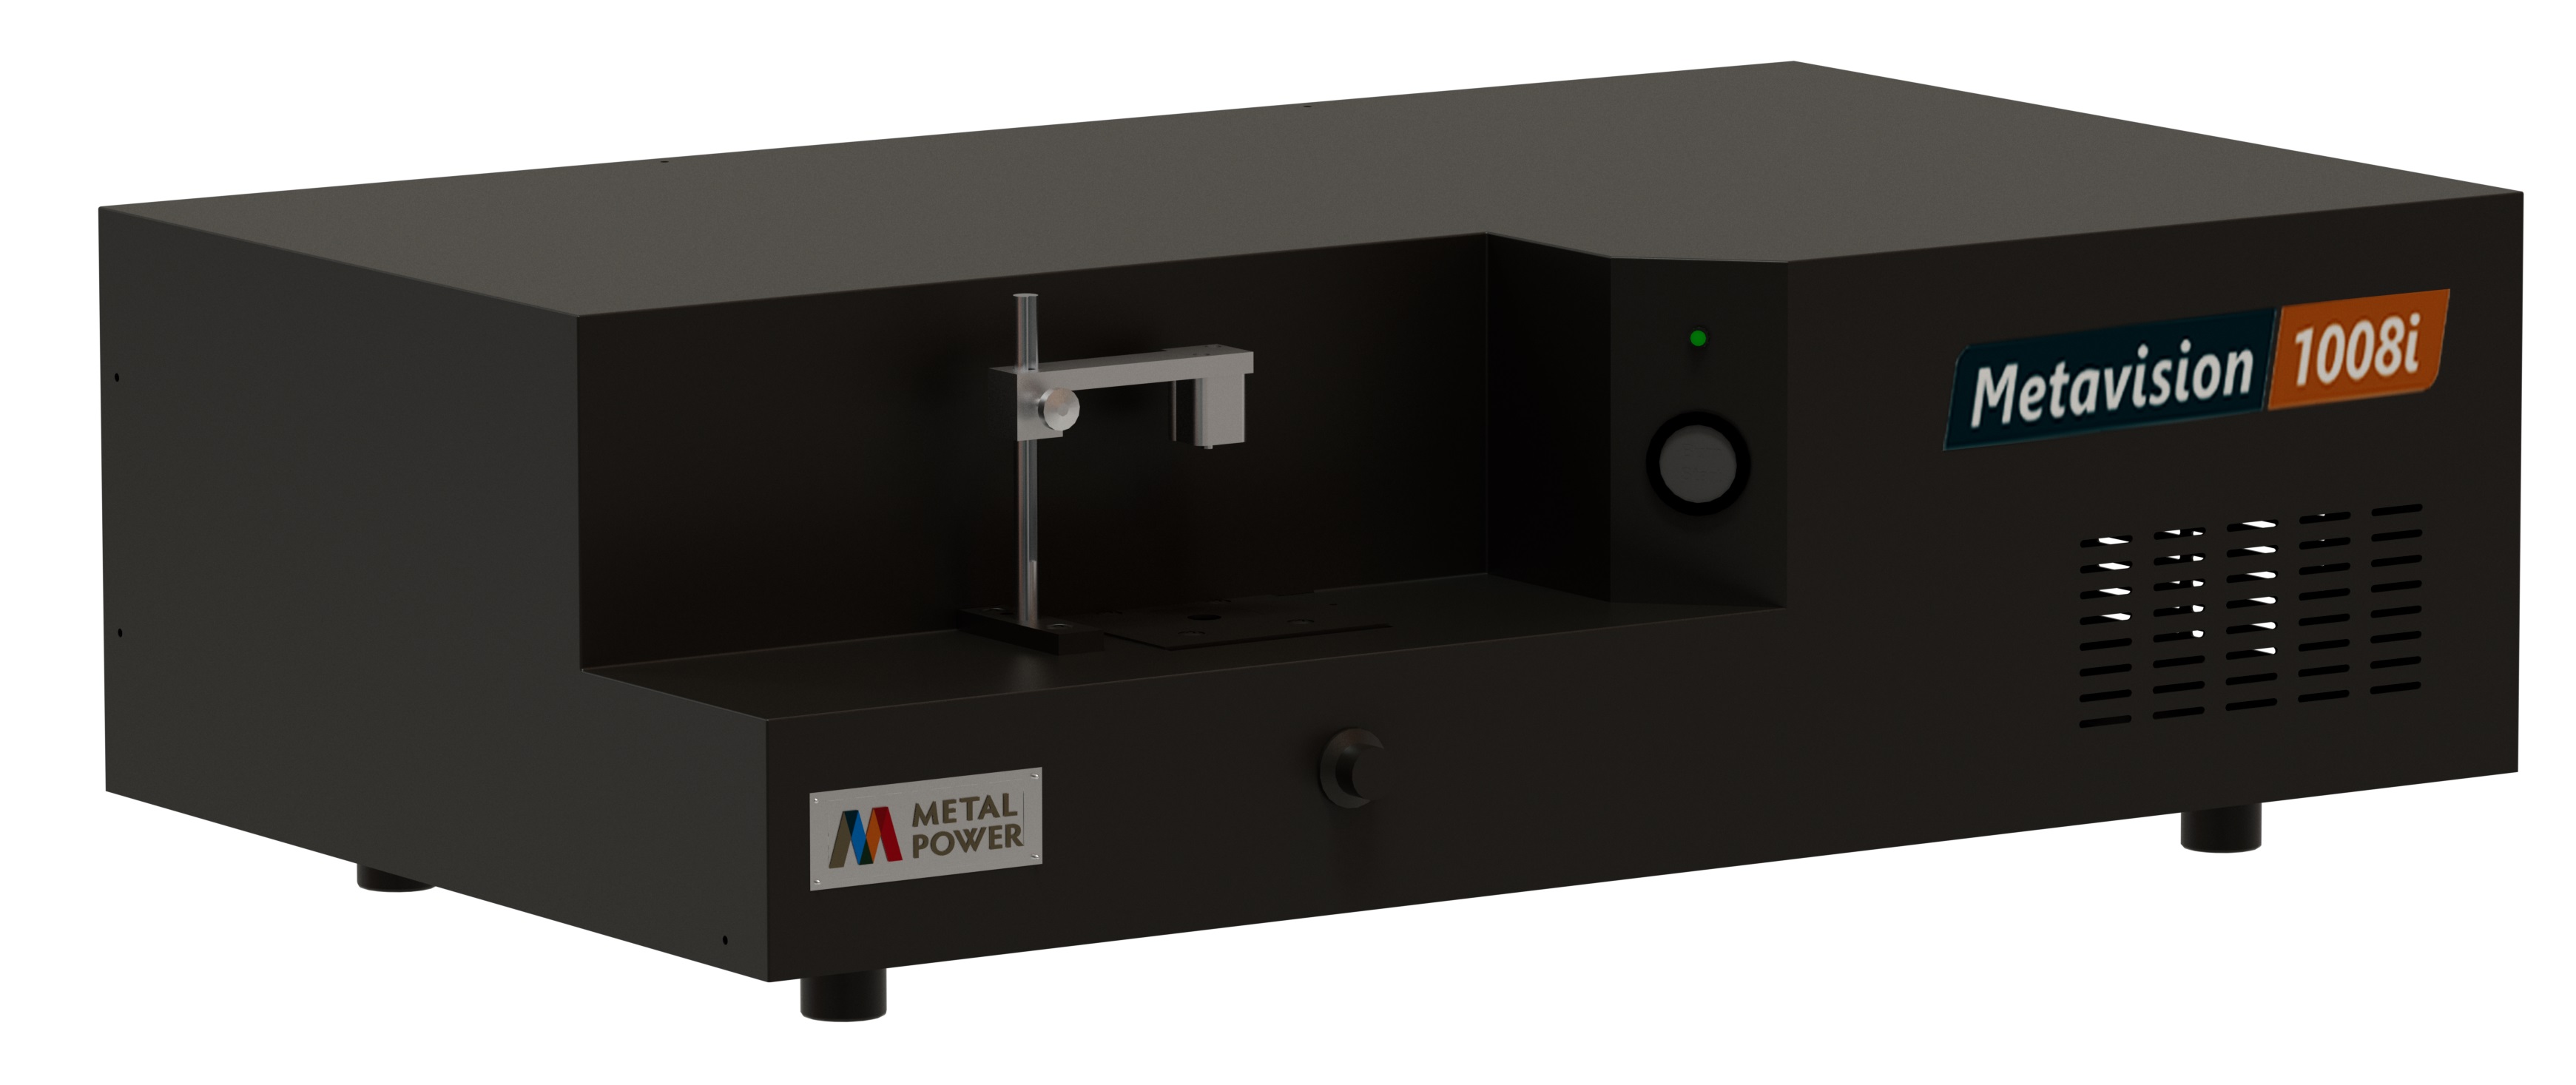 Metavision-1008i型台式直读光谱仪批发